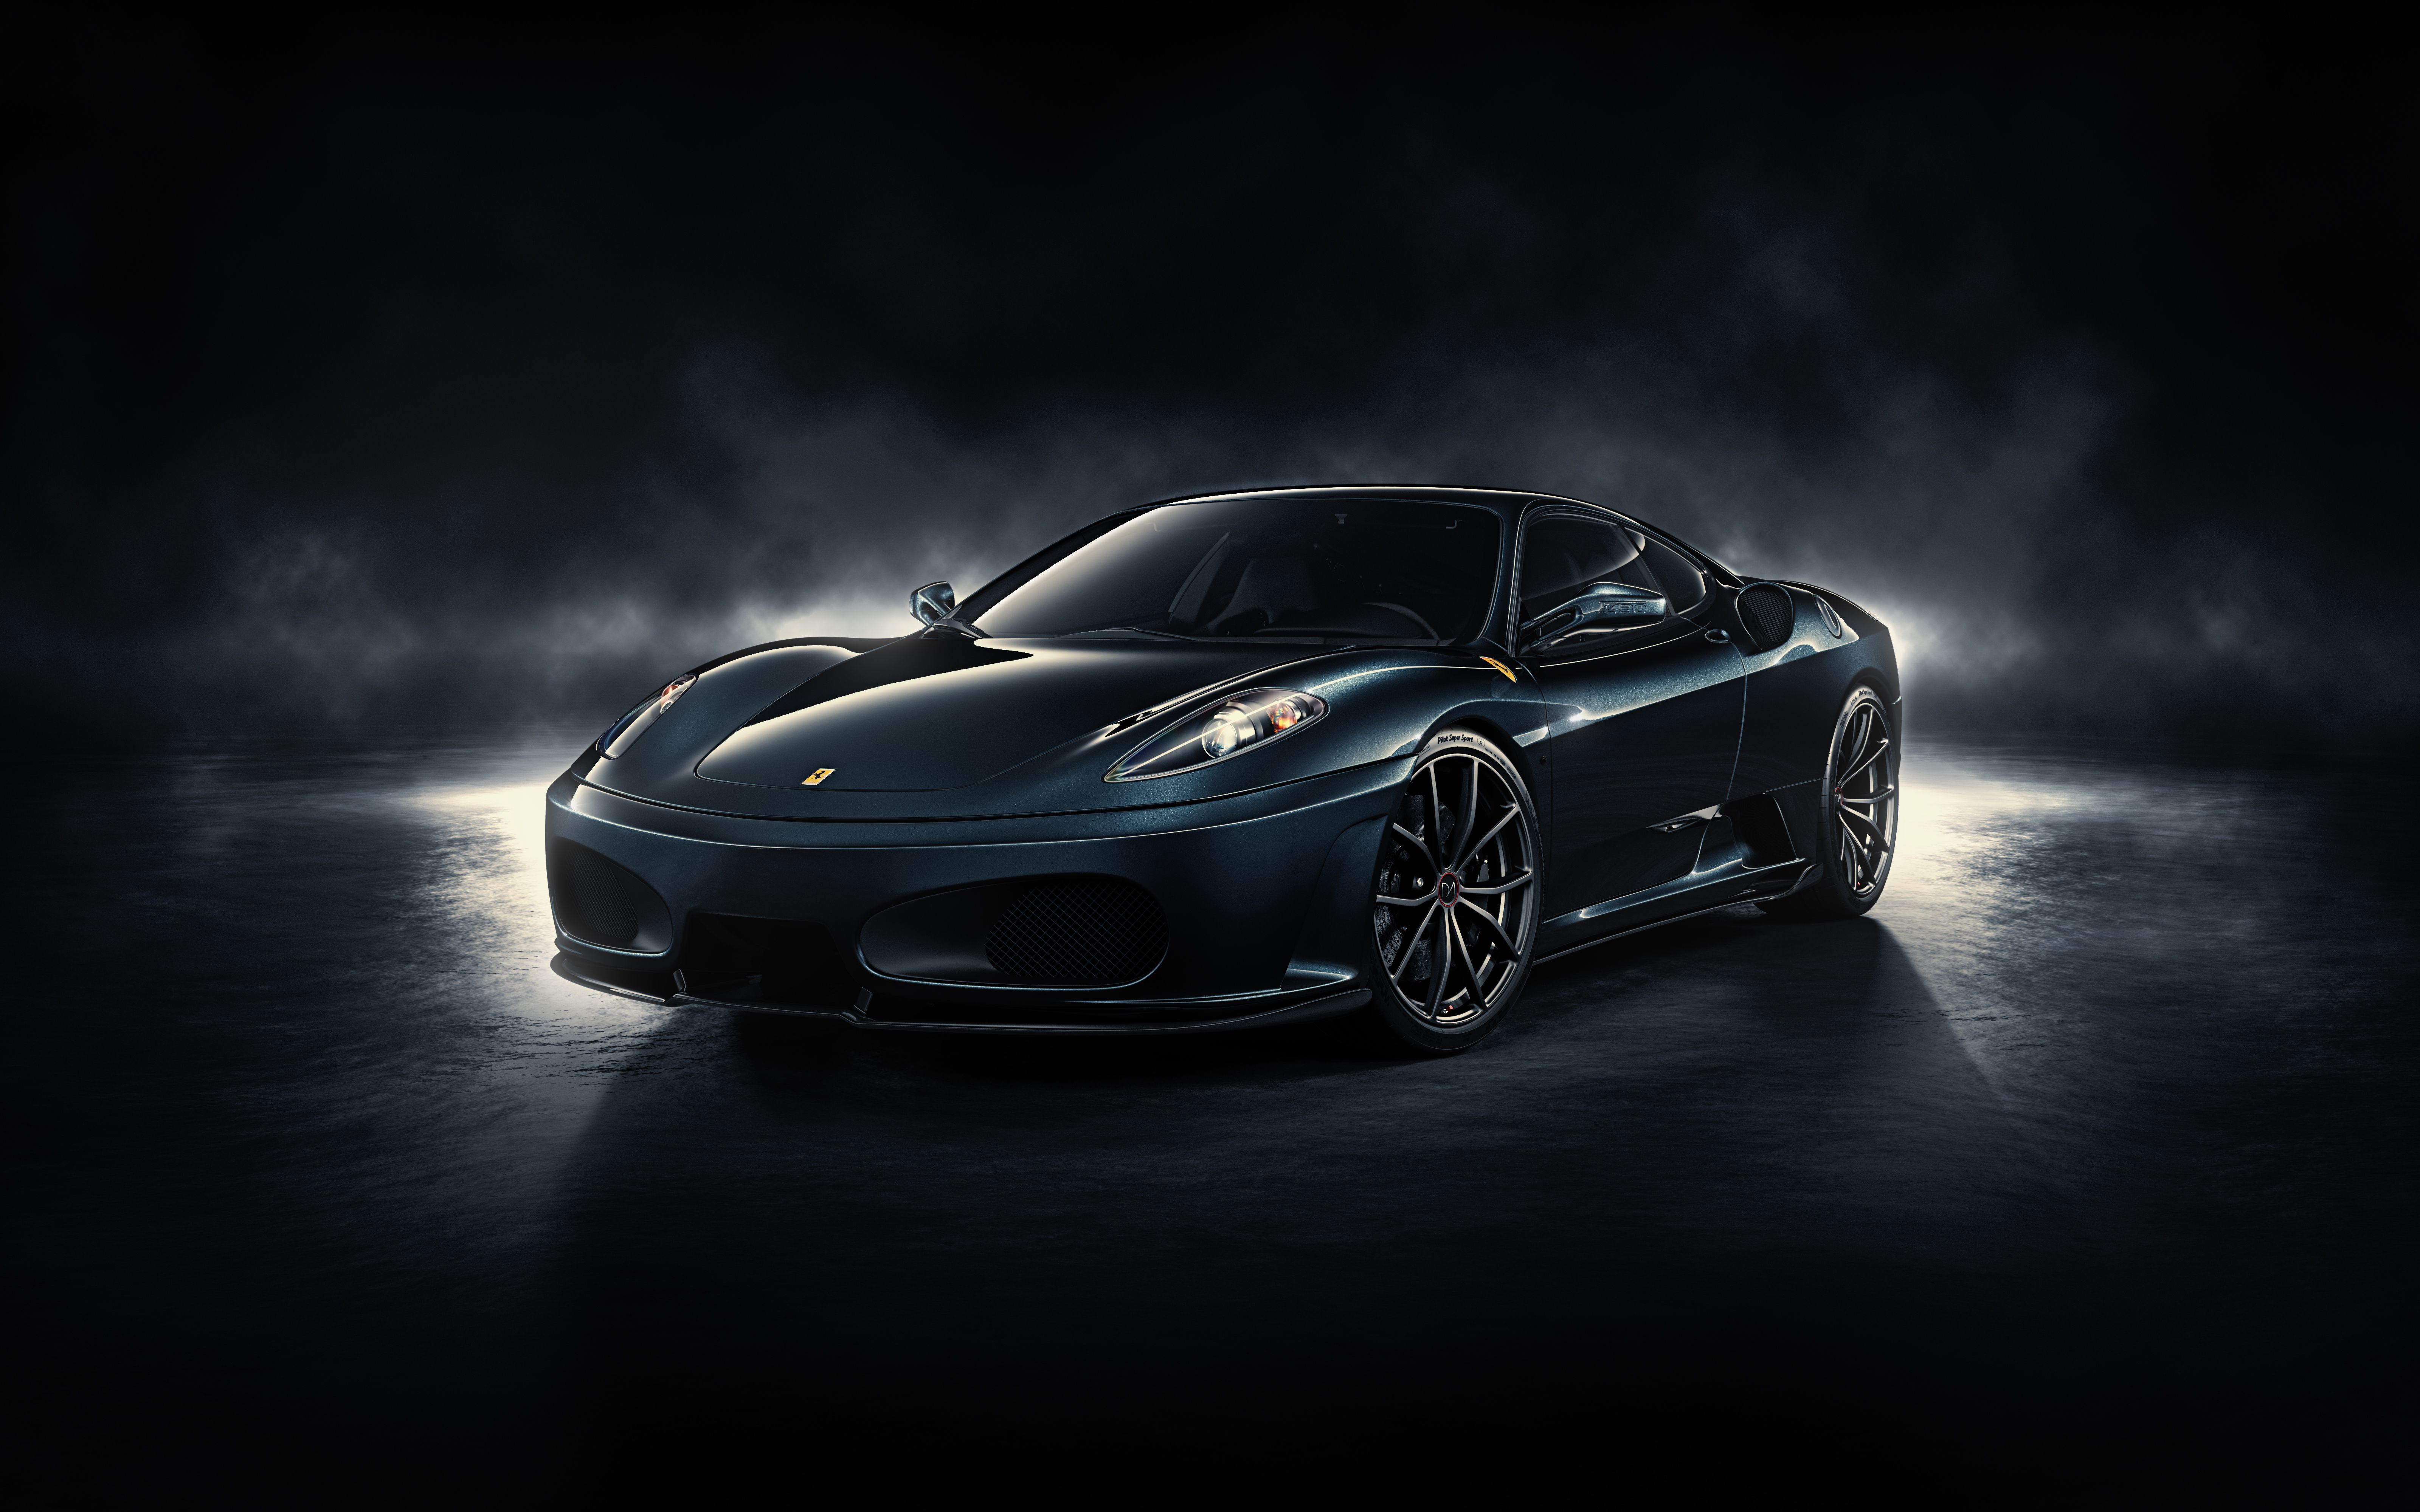 Ferrari f430 Black Wallpapers Images Photos Pictures ...